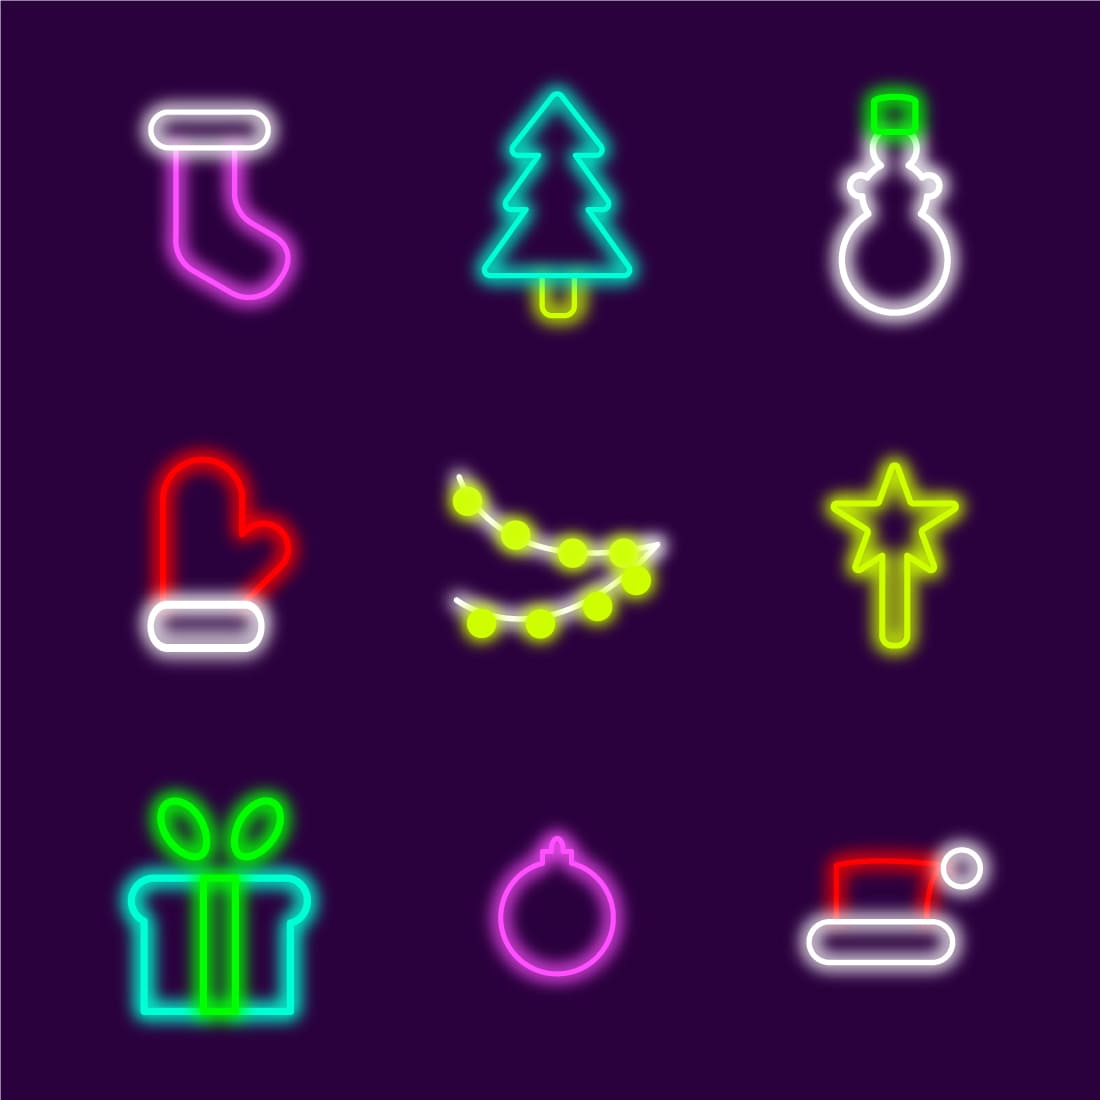 Christmas App Icons Free 02.